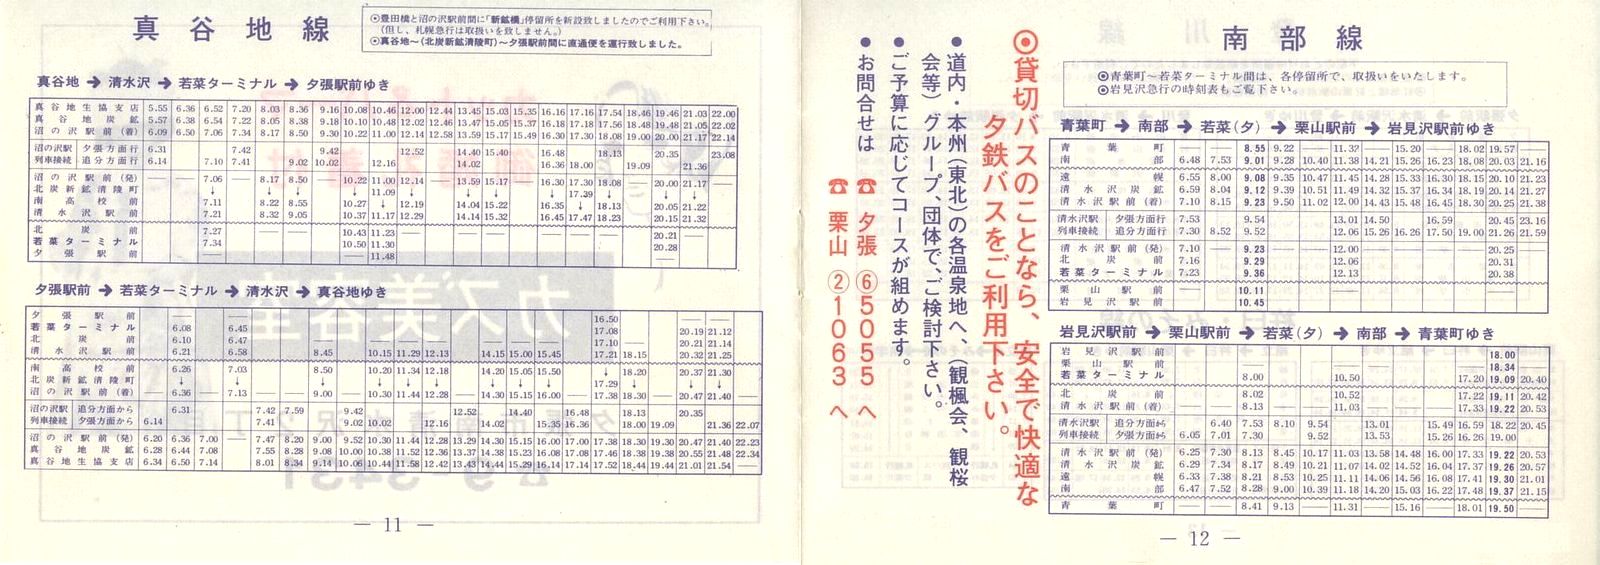 1978-09-26_[S_[EIRōq\_11-12